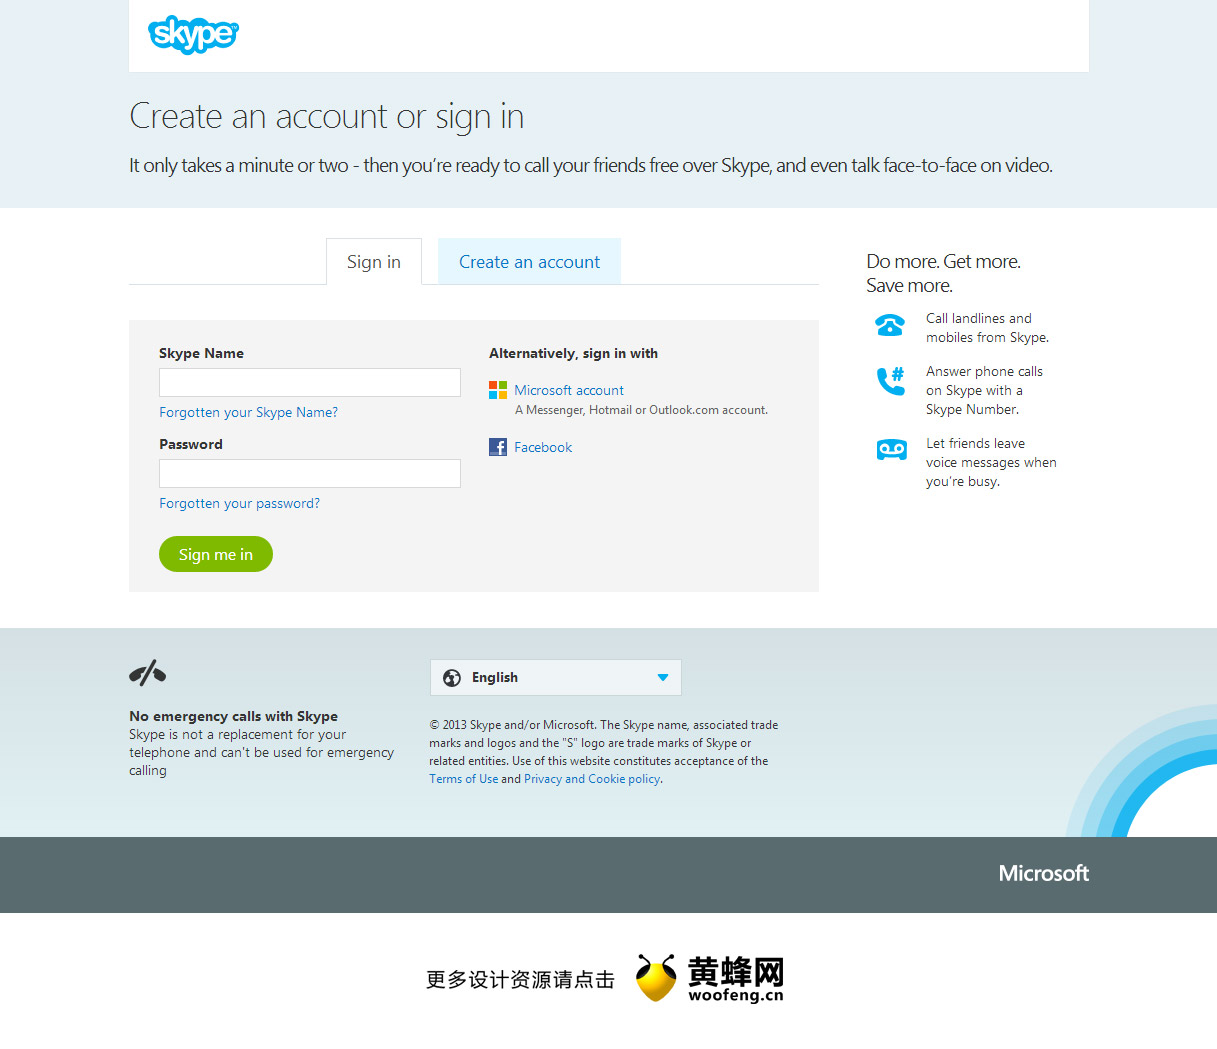 skype网站登录、注册页面设计，来源自黄蜂网https://woofeng.cn/webcut/